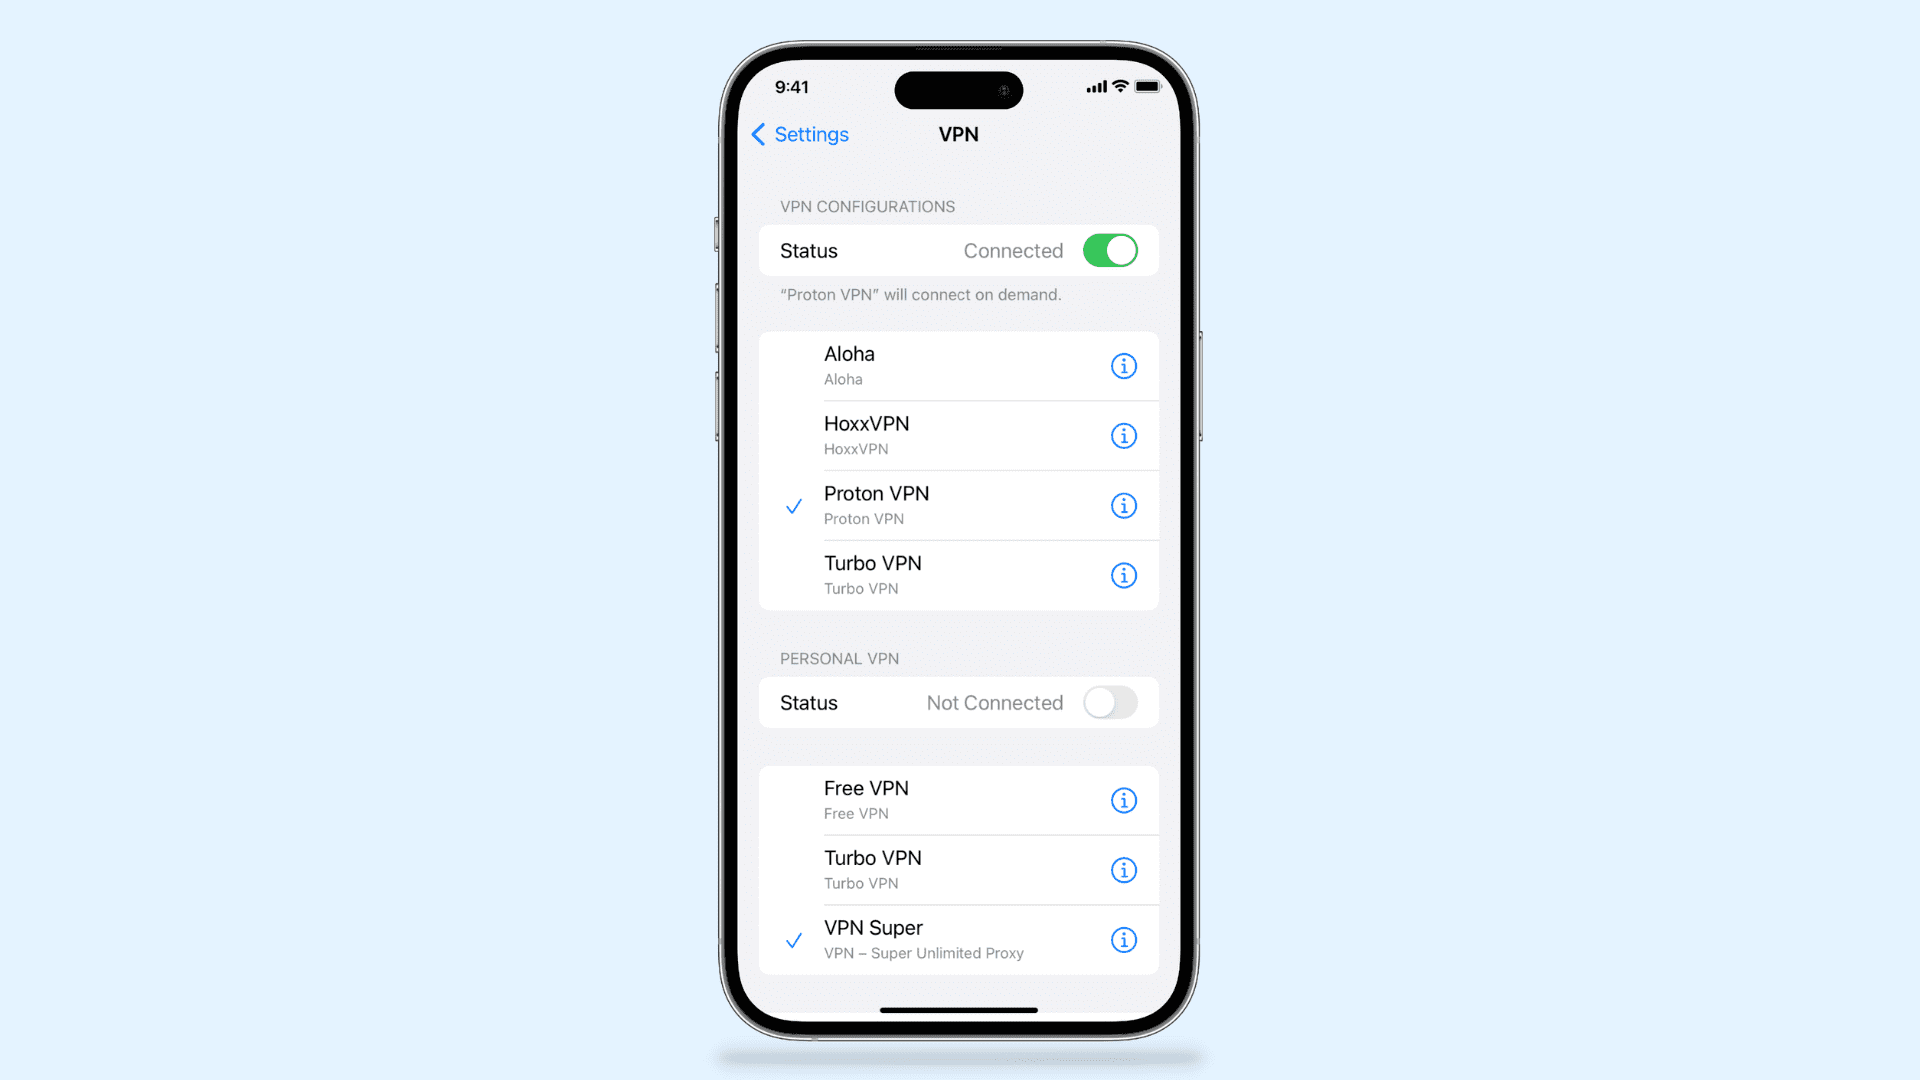 iPhone screen showing various VPN profiles